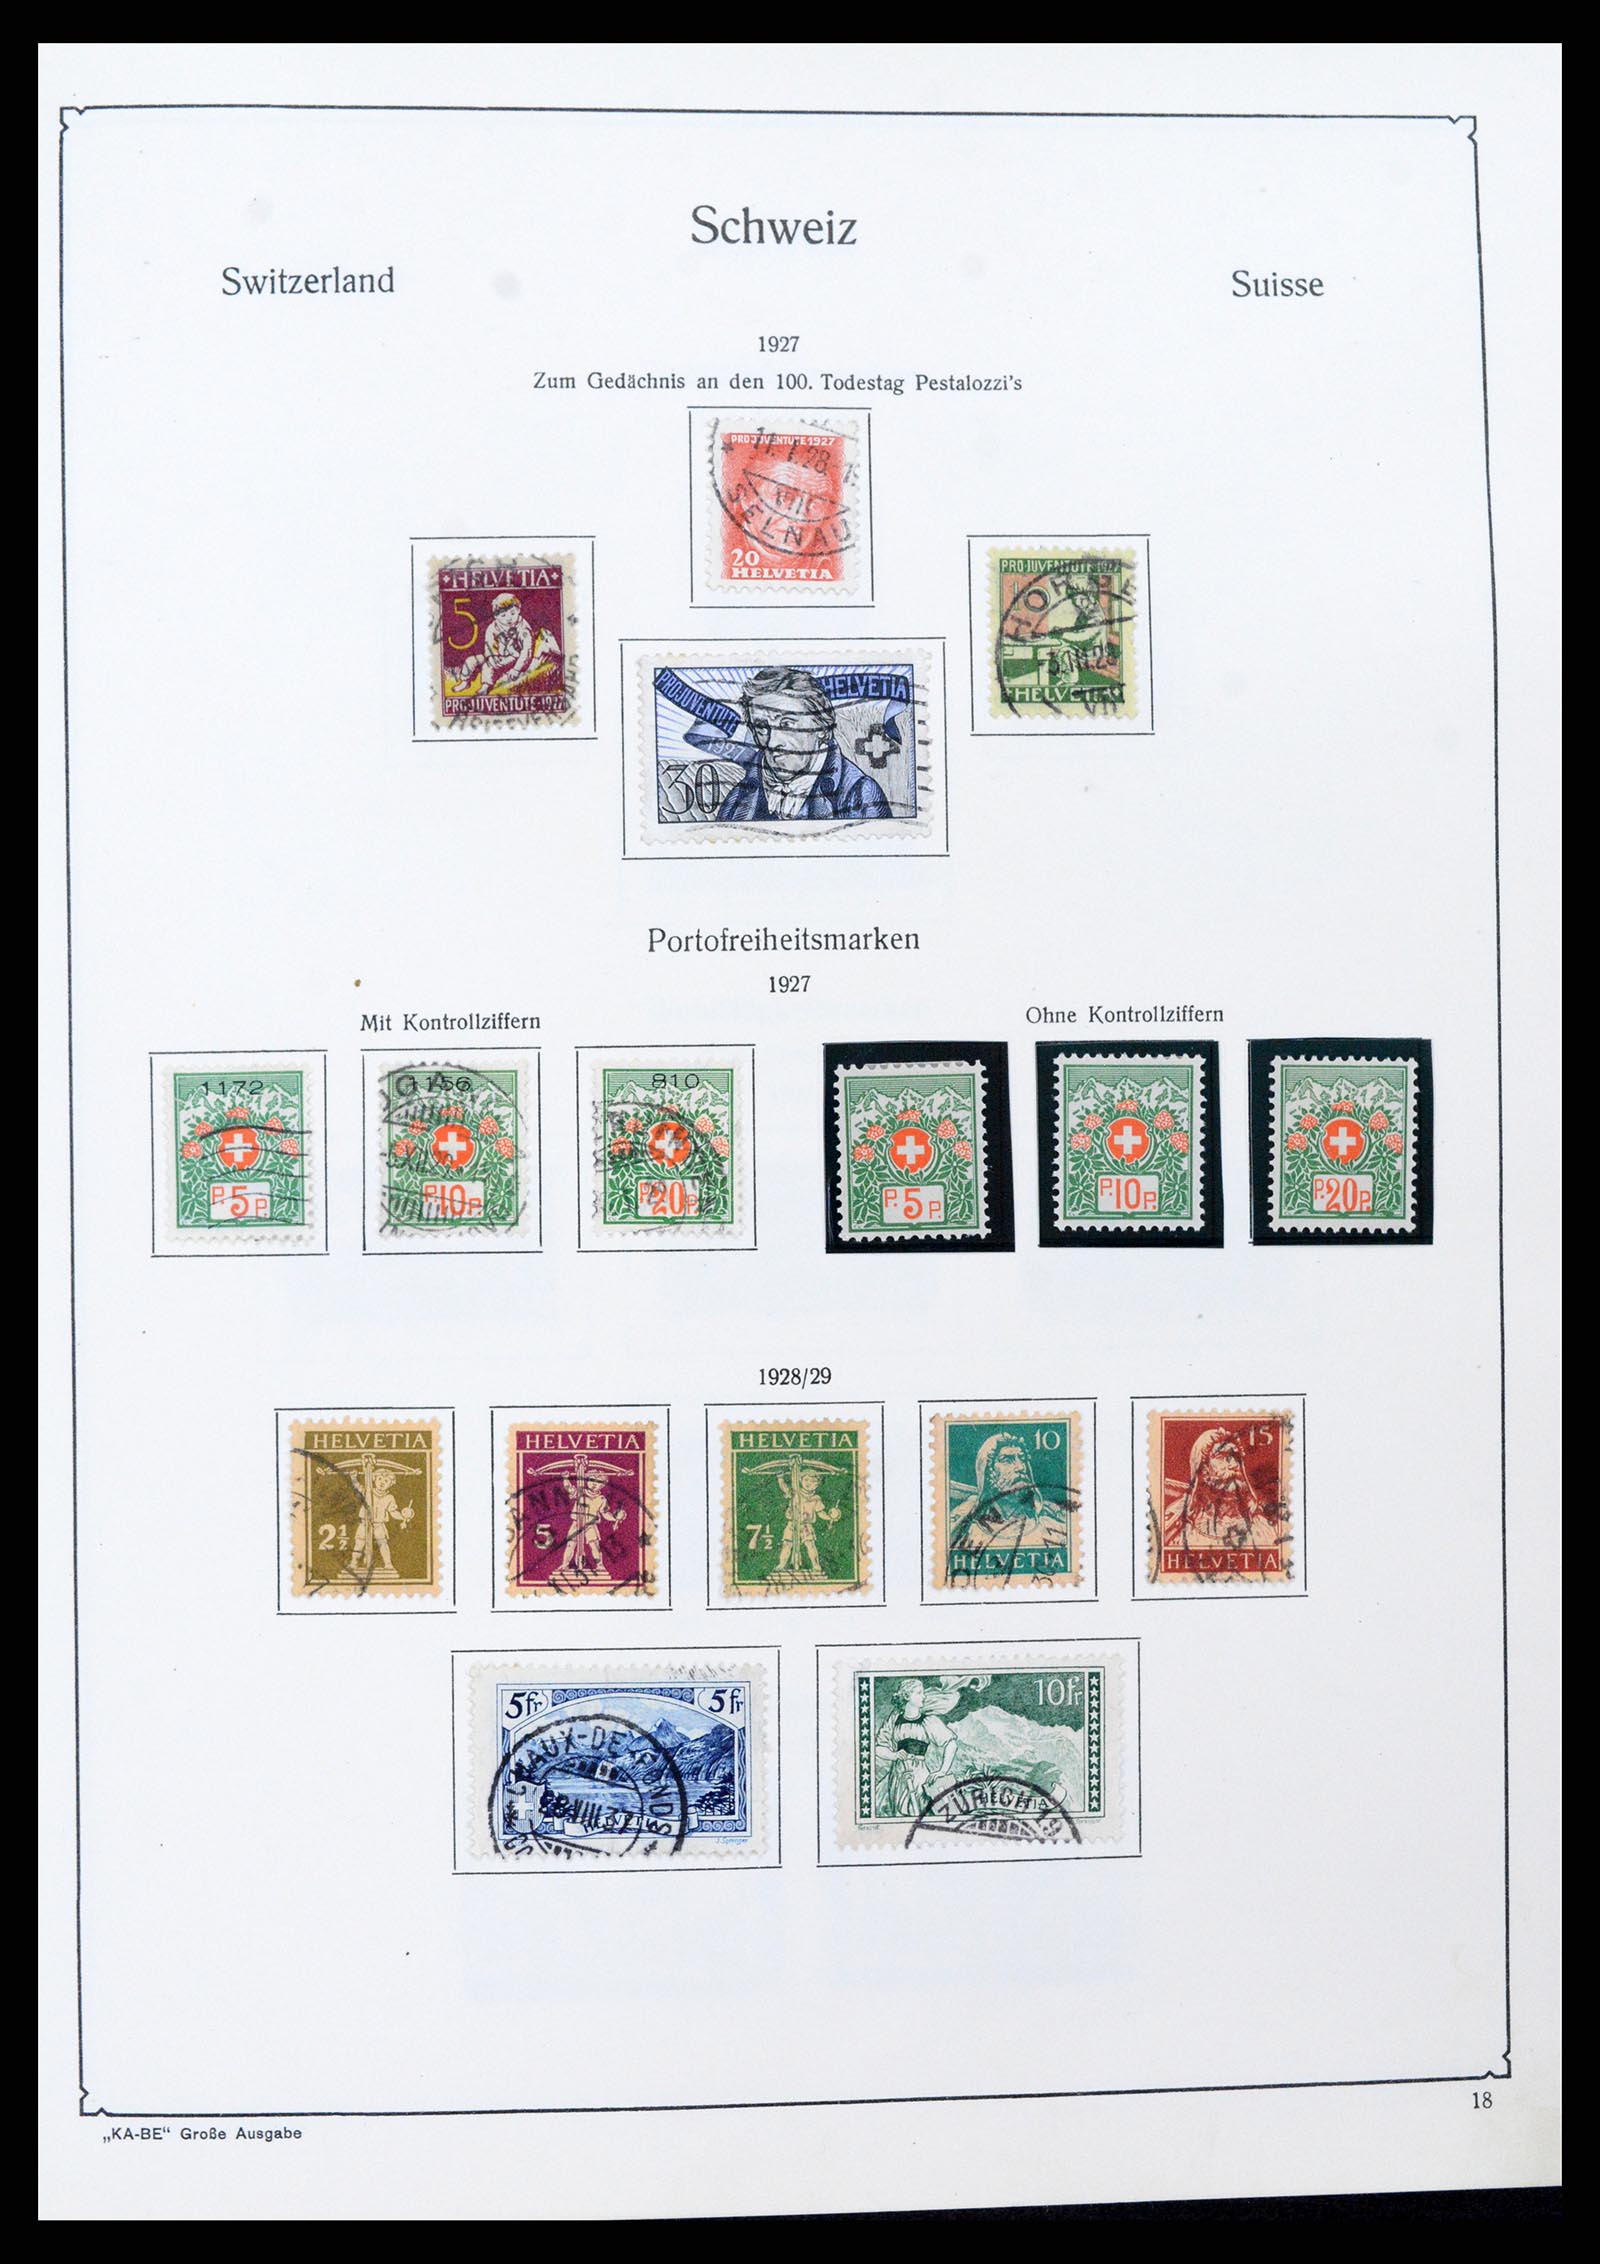 37588 017 - Stamp collection 37588 Switzerland 1854-1974.